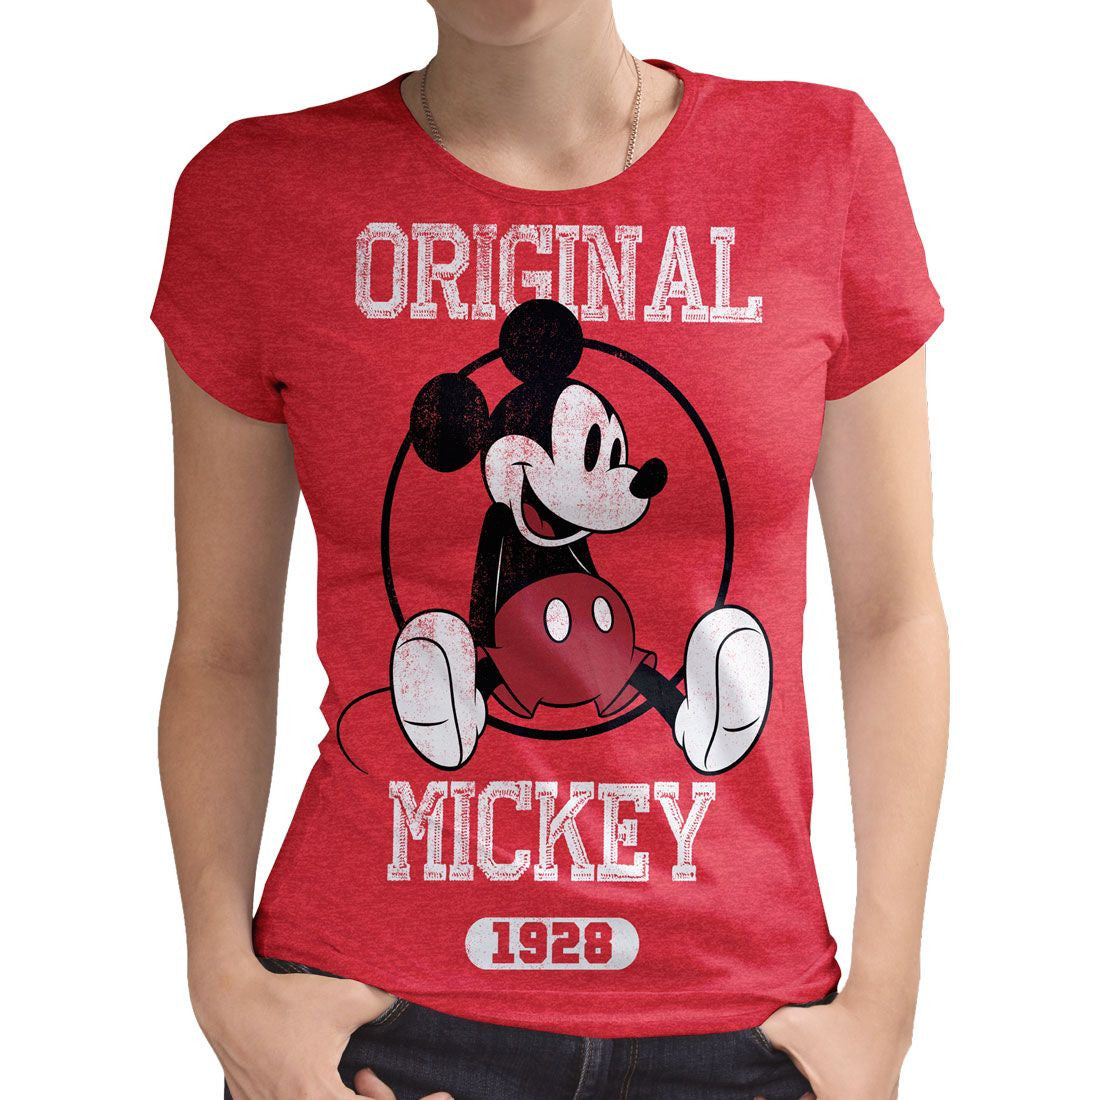 T-shirt Femme Disney - Original Mickey